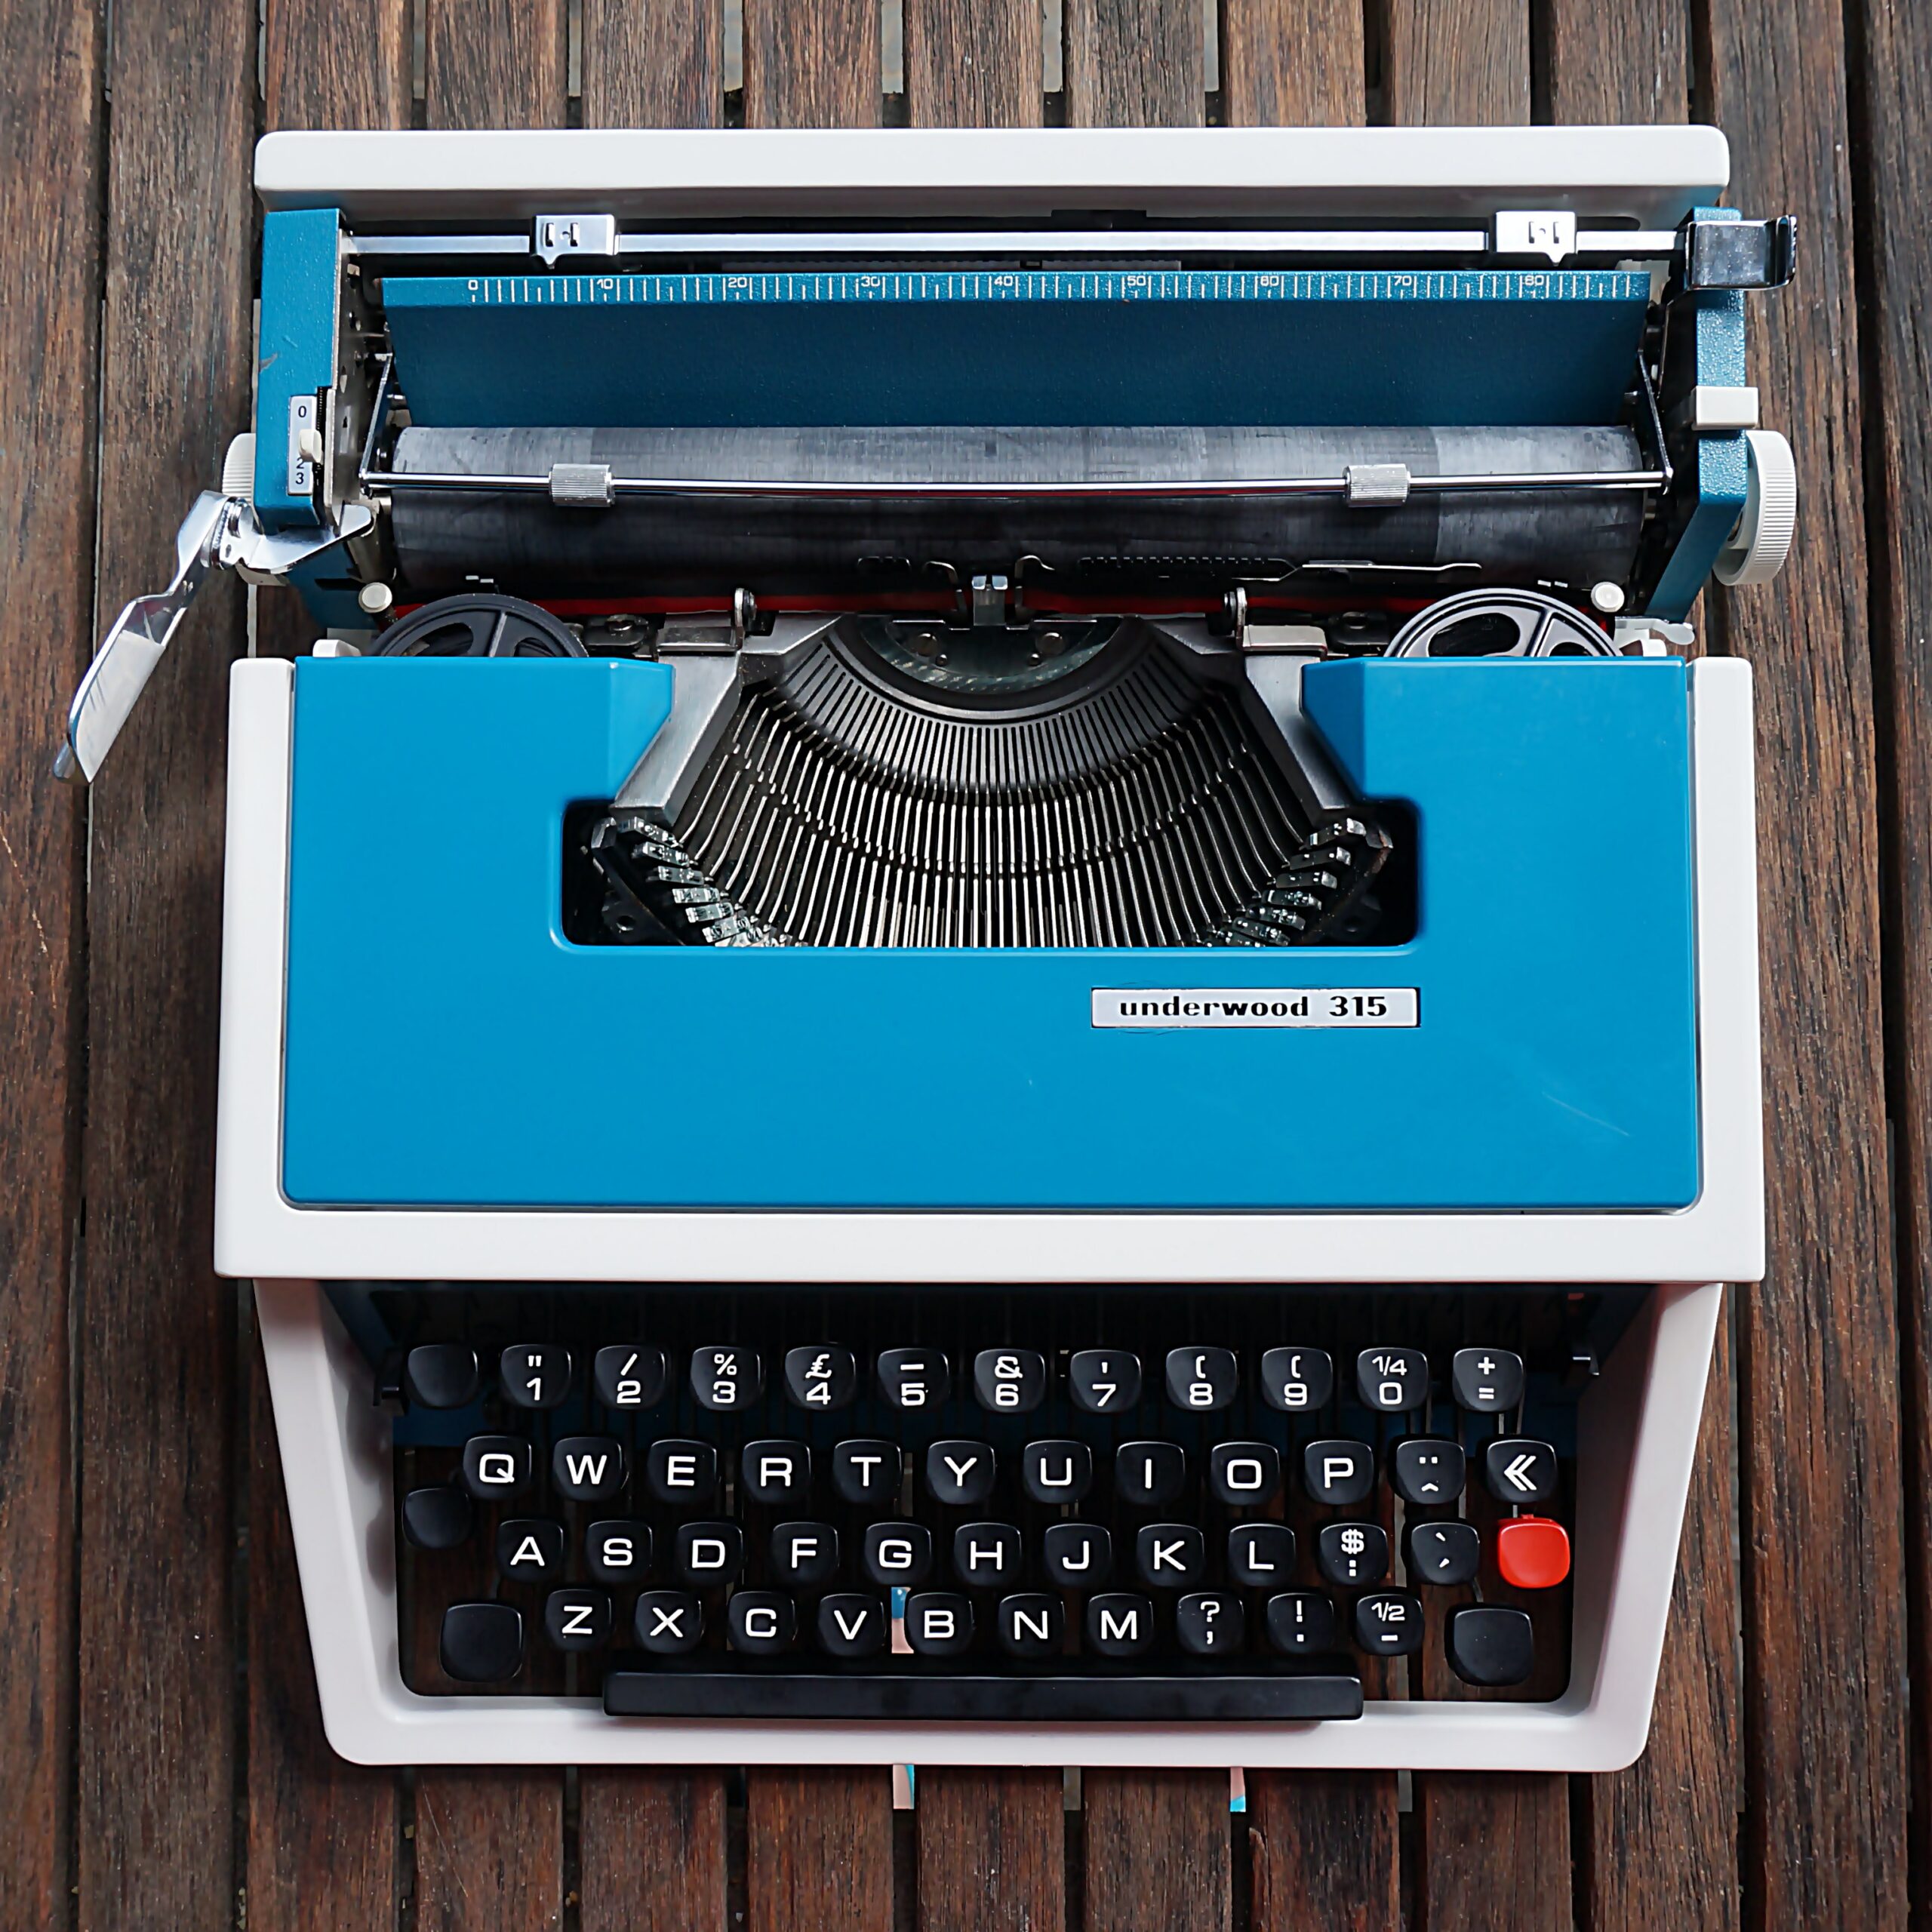 Underwood 315 Typewriter For Sale - My Cup Of Retro Typewriter Shop